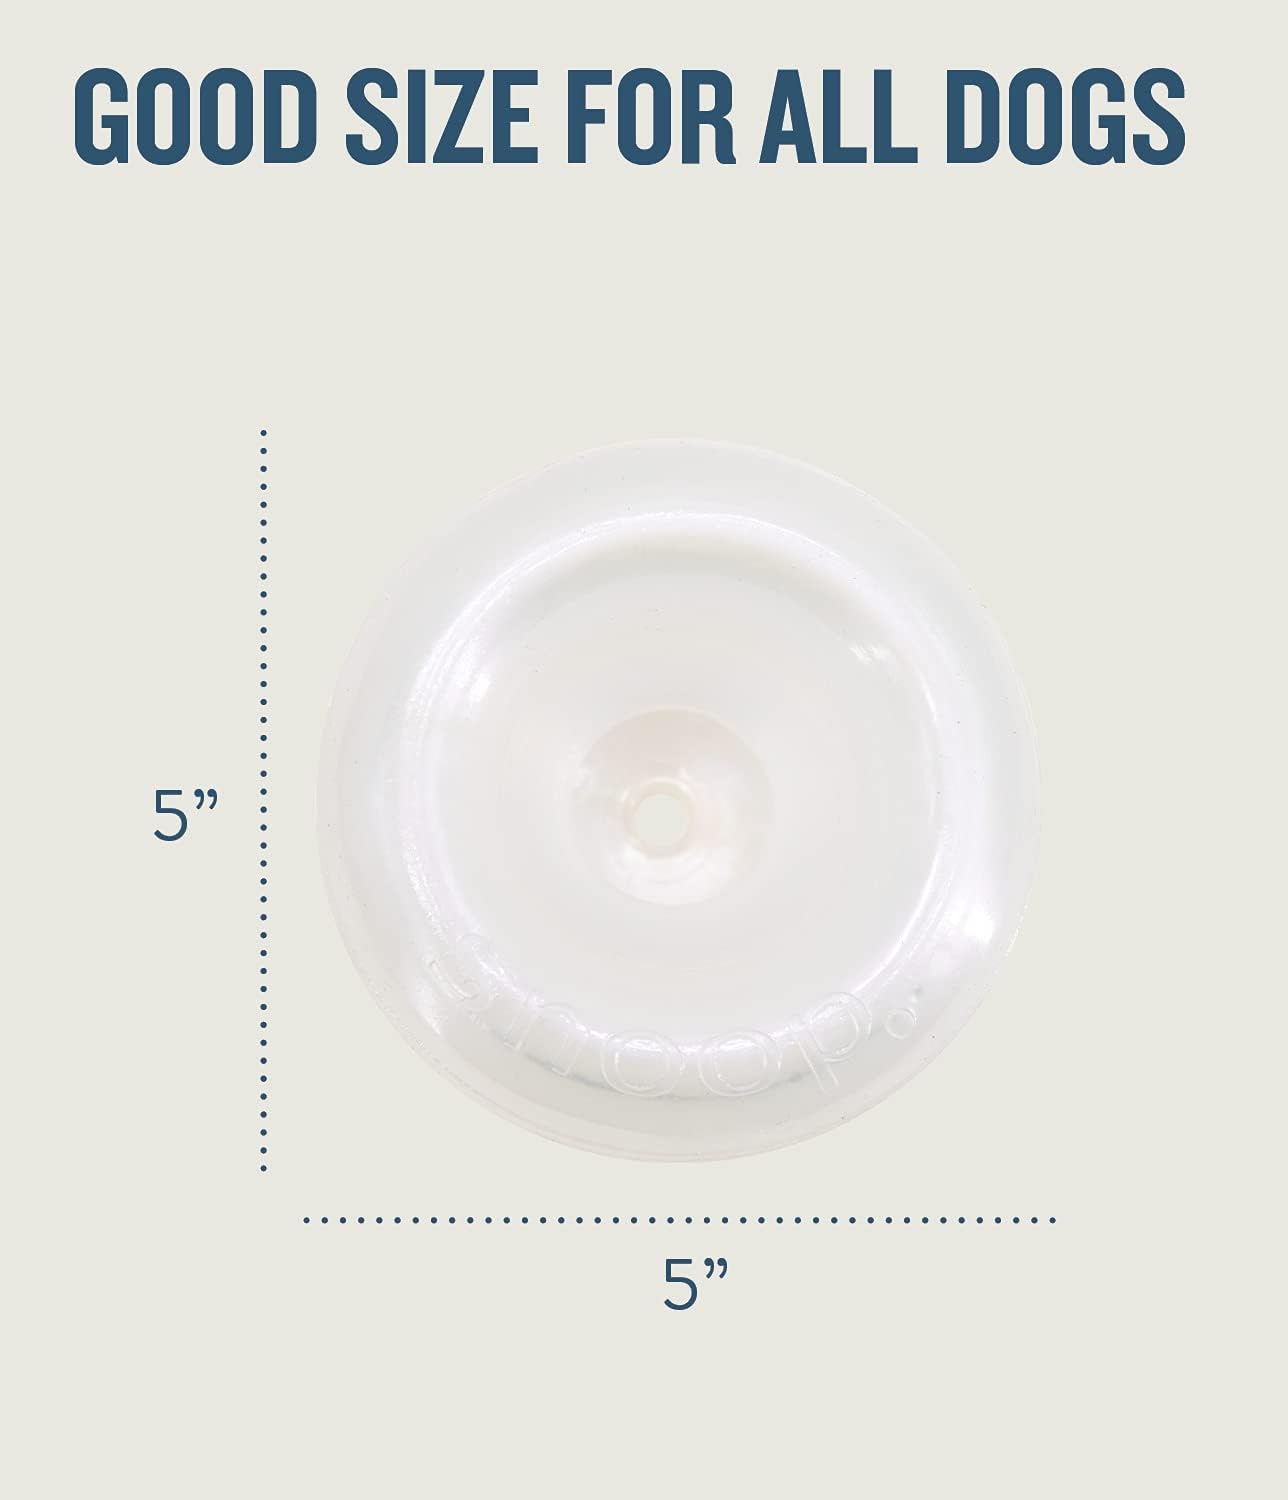 Planet Dog Orbee-Tuff Snoop Interactive Treat Dispensing Dog Toy, Large, Orange